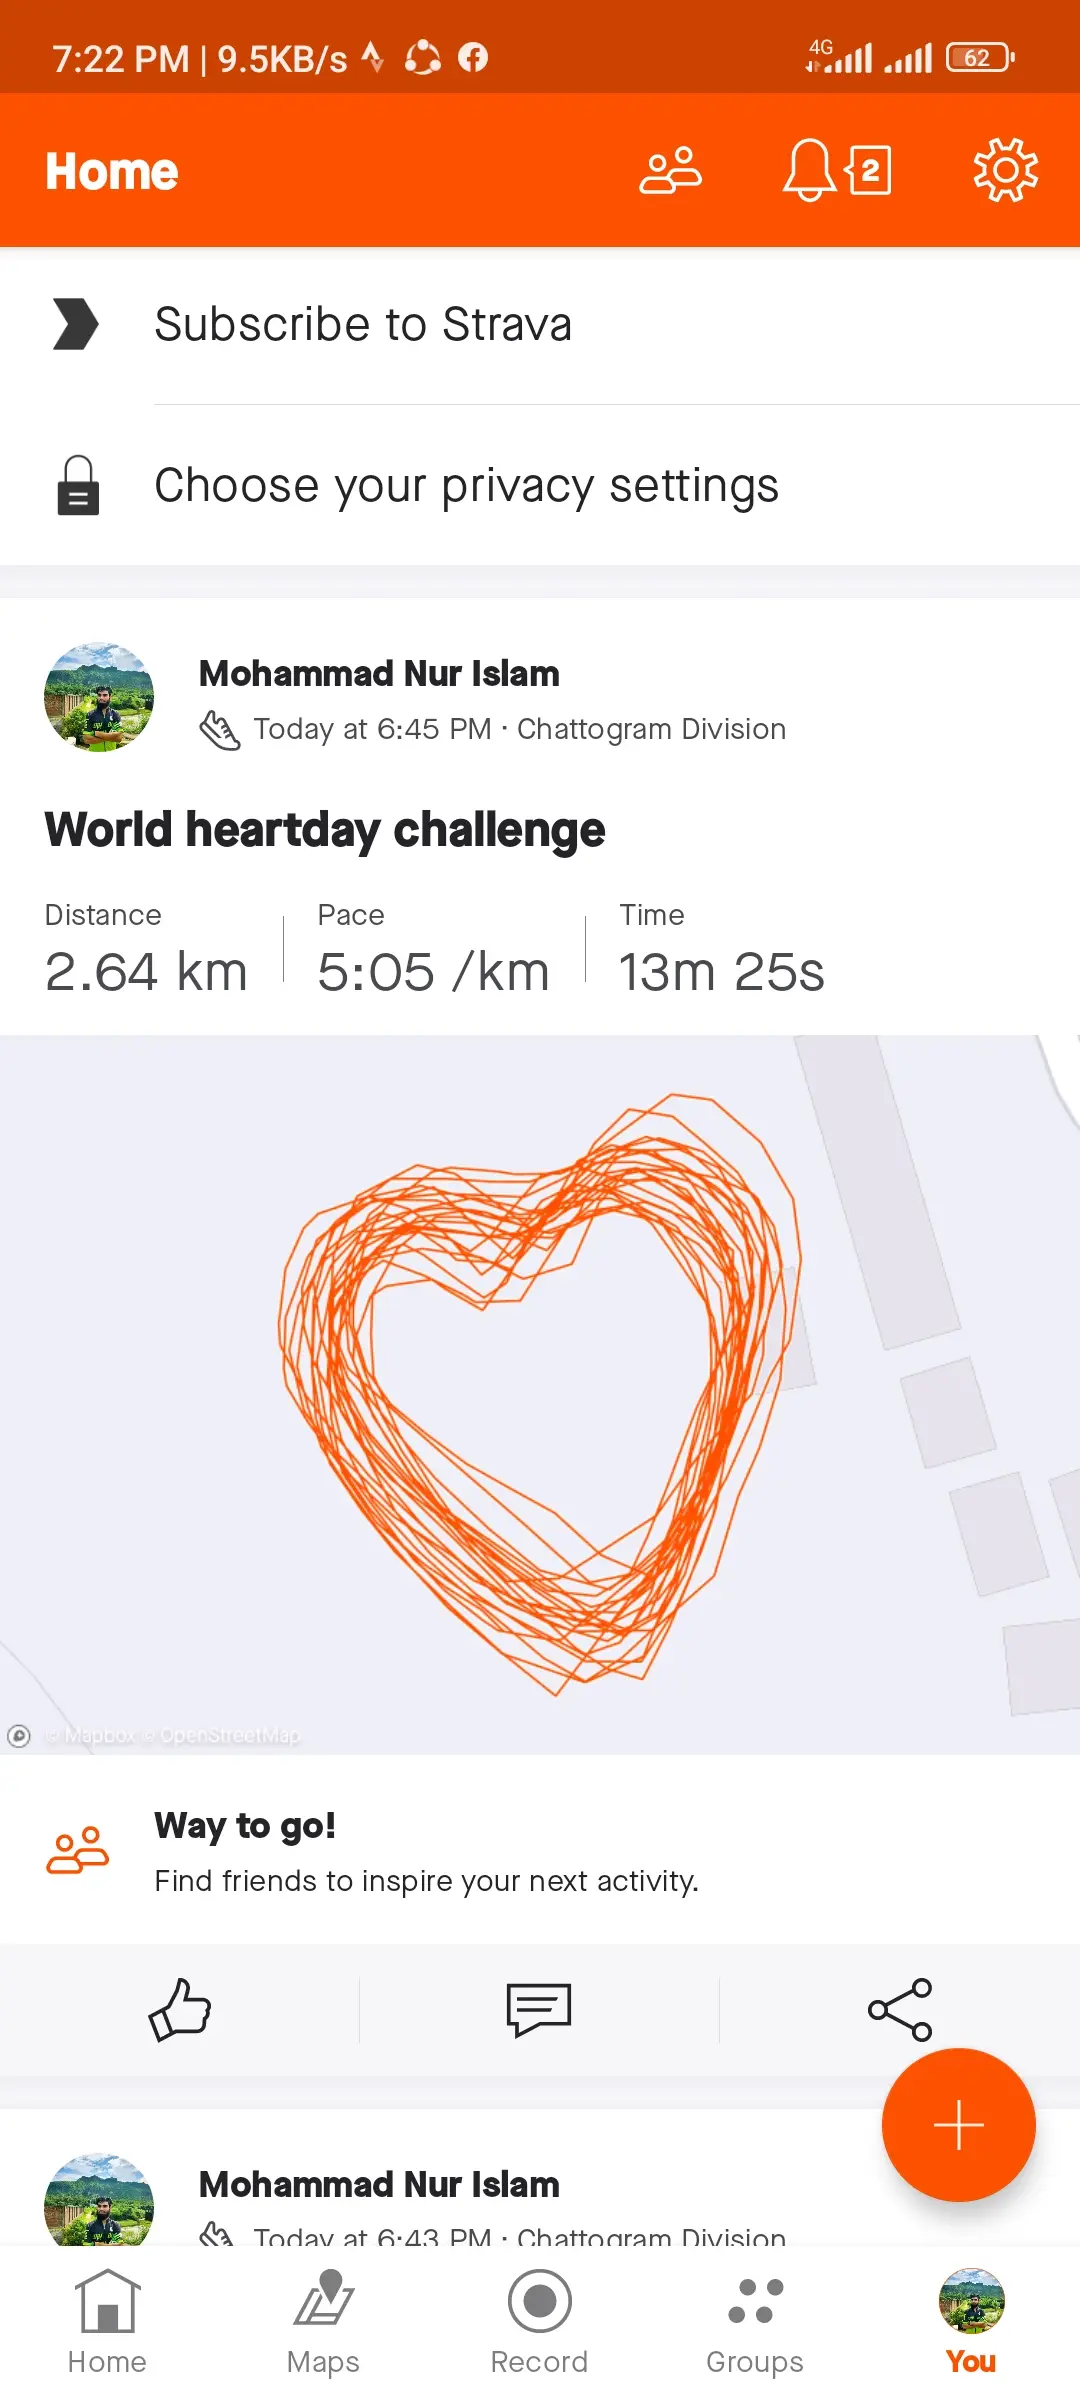 World heartday challenge